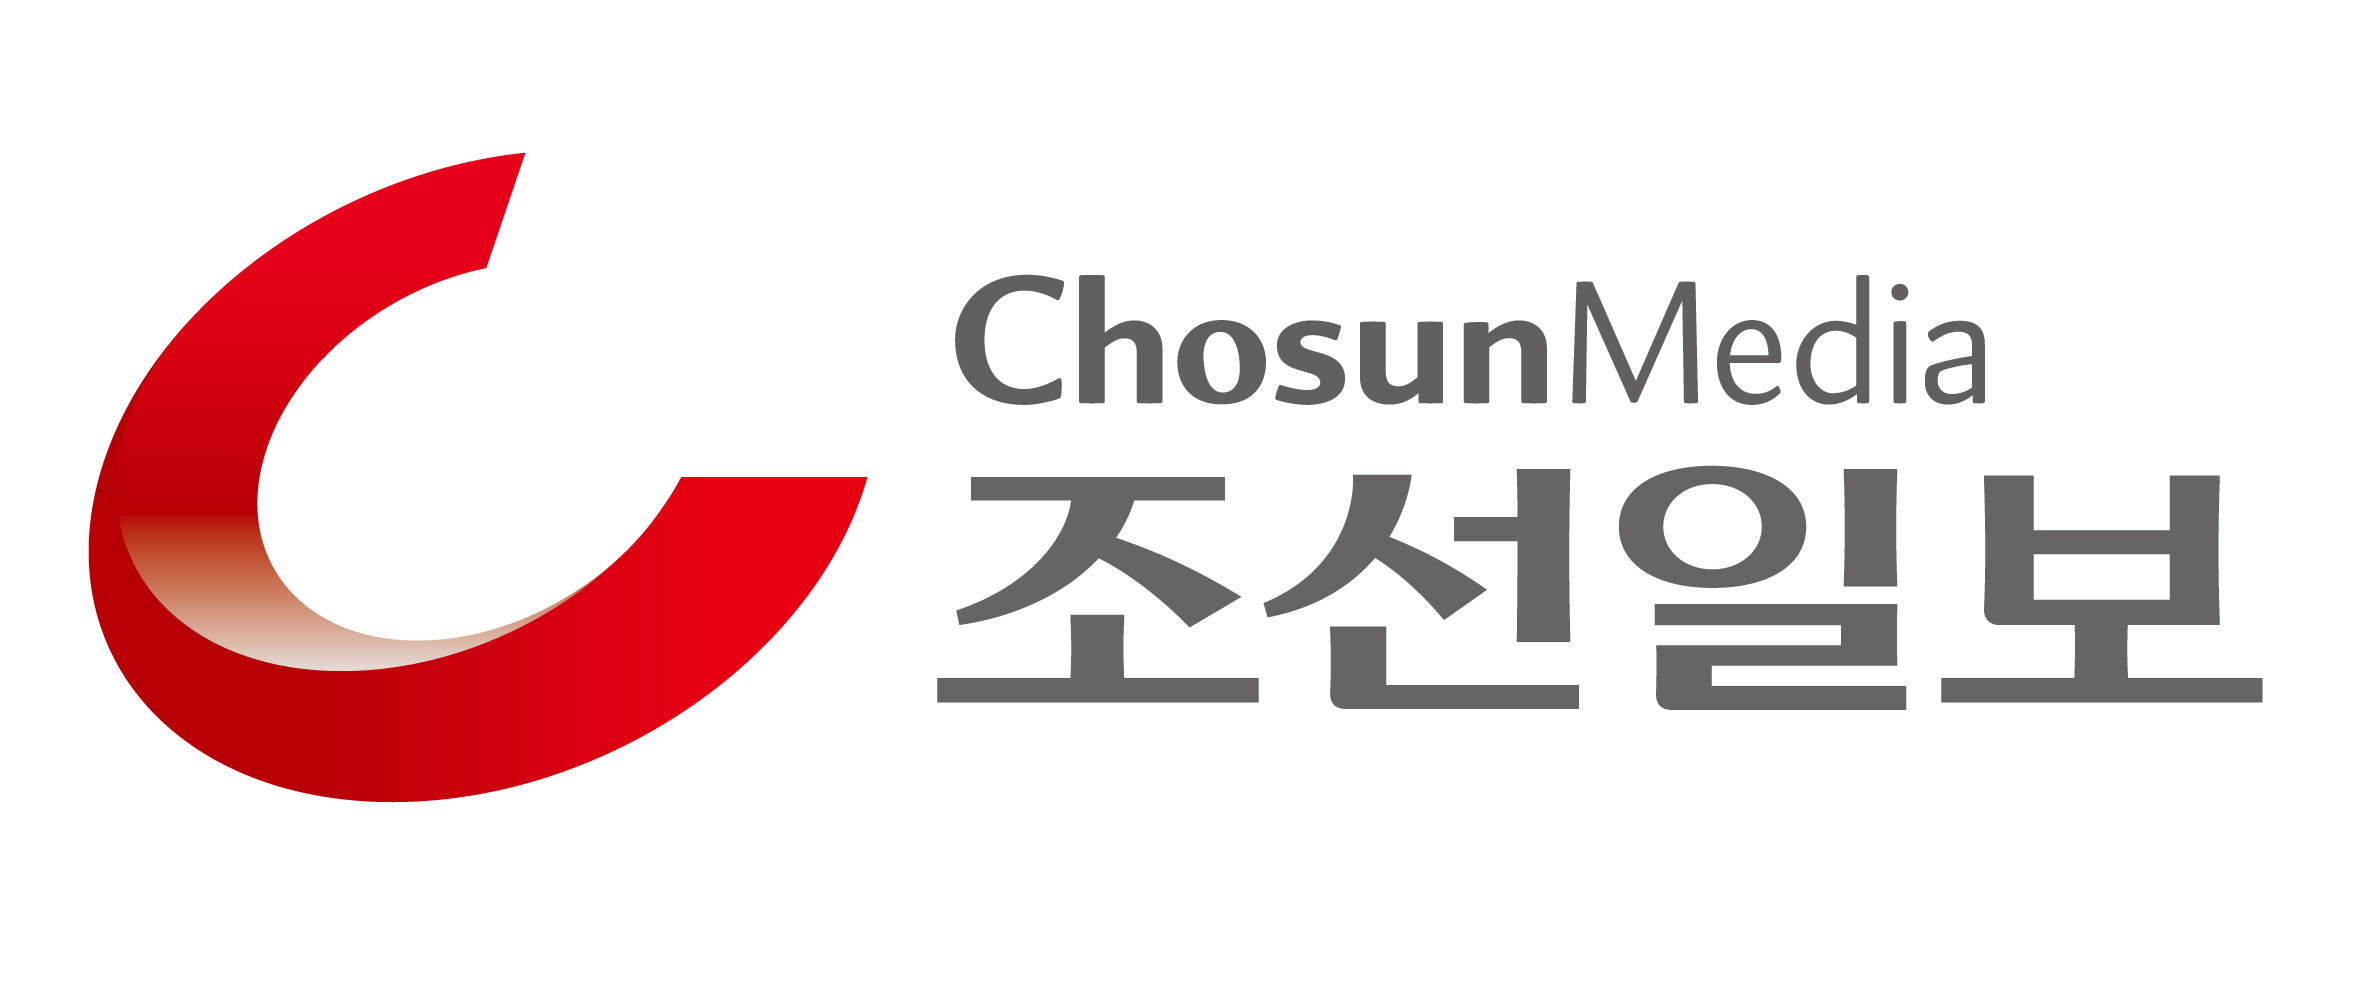 ChosunMedia 조선일보